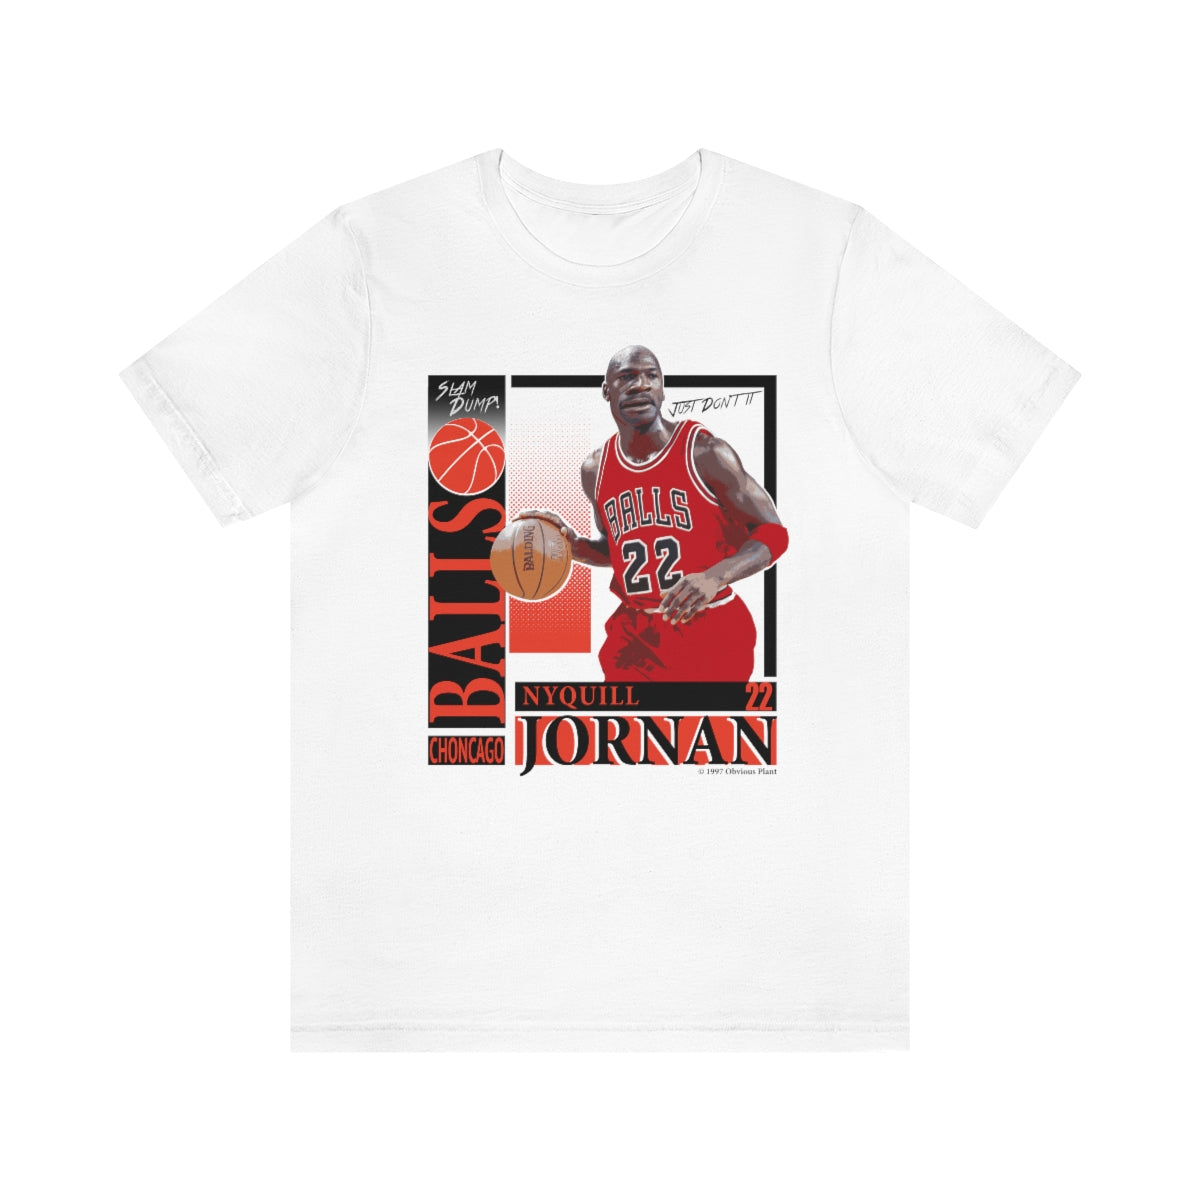 Michael Jordan Jersey Active Jerseys for Men